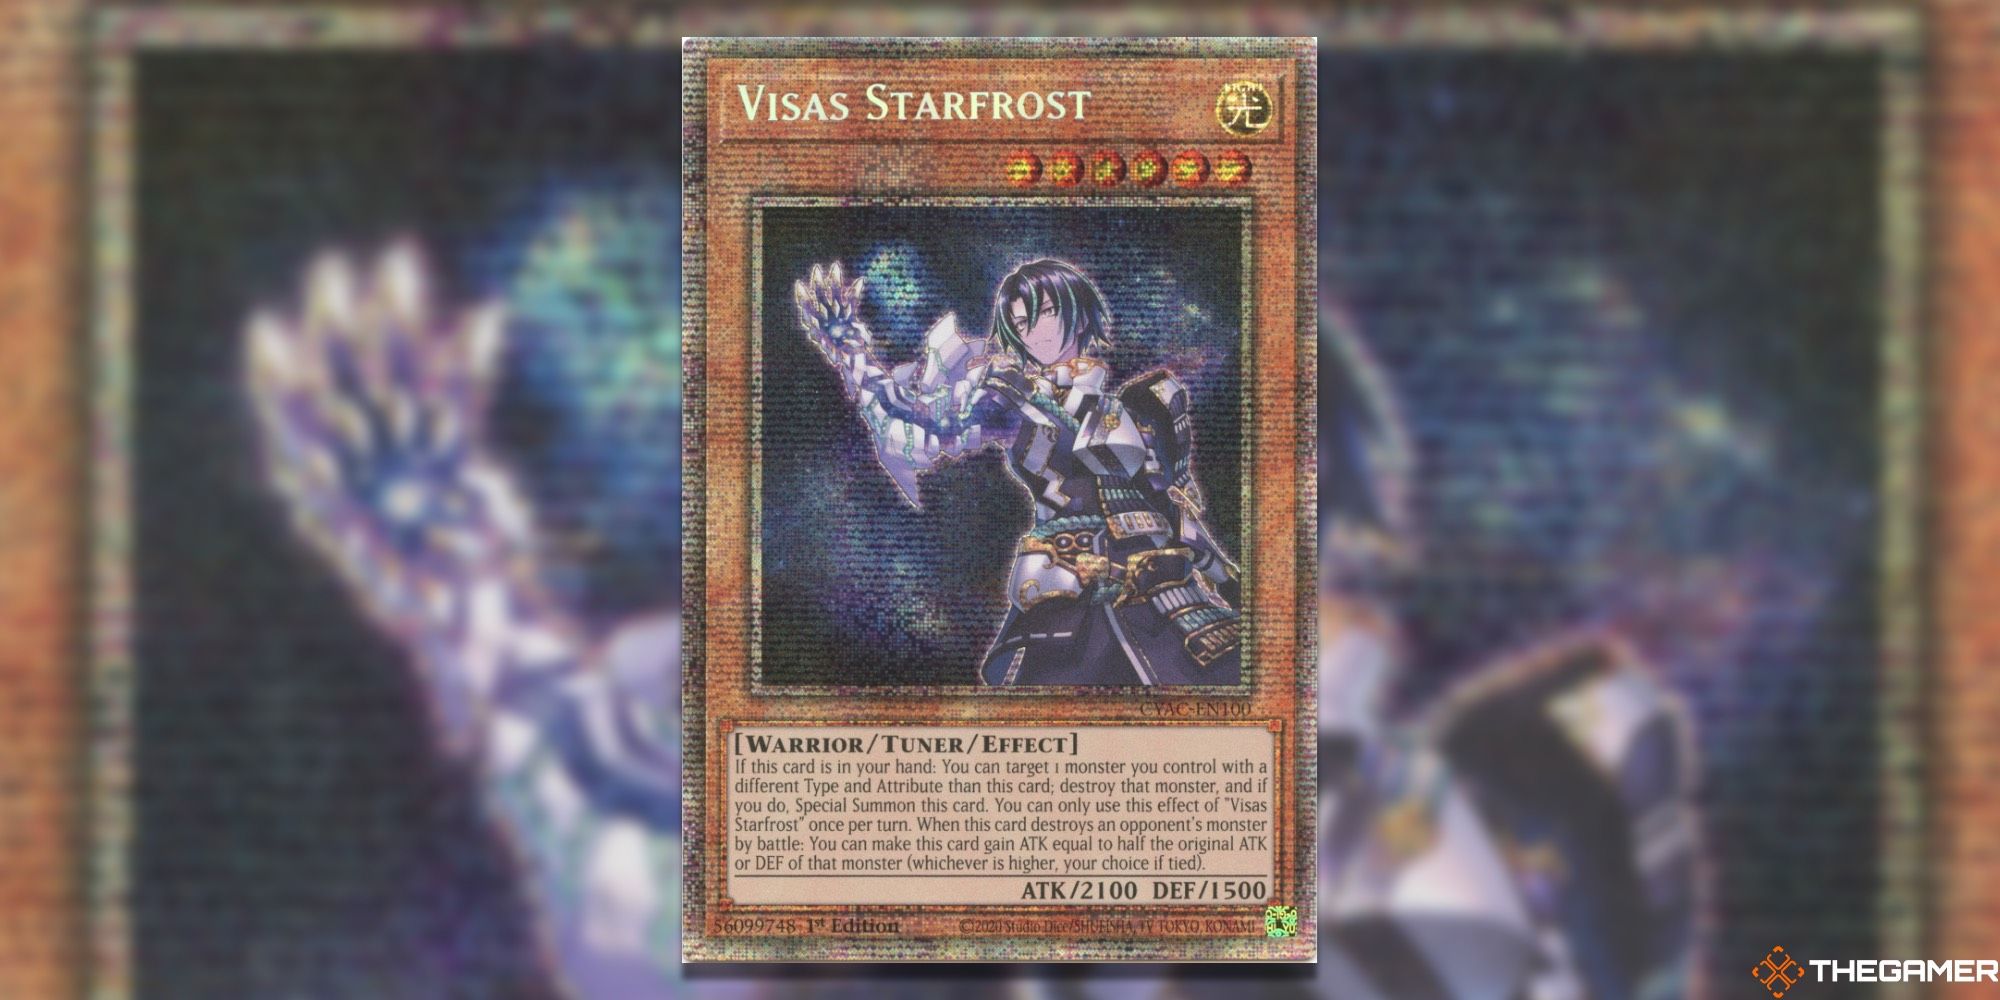 Visa Starfrost